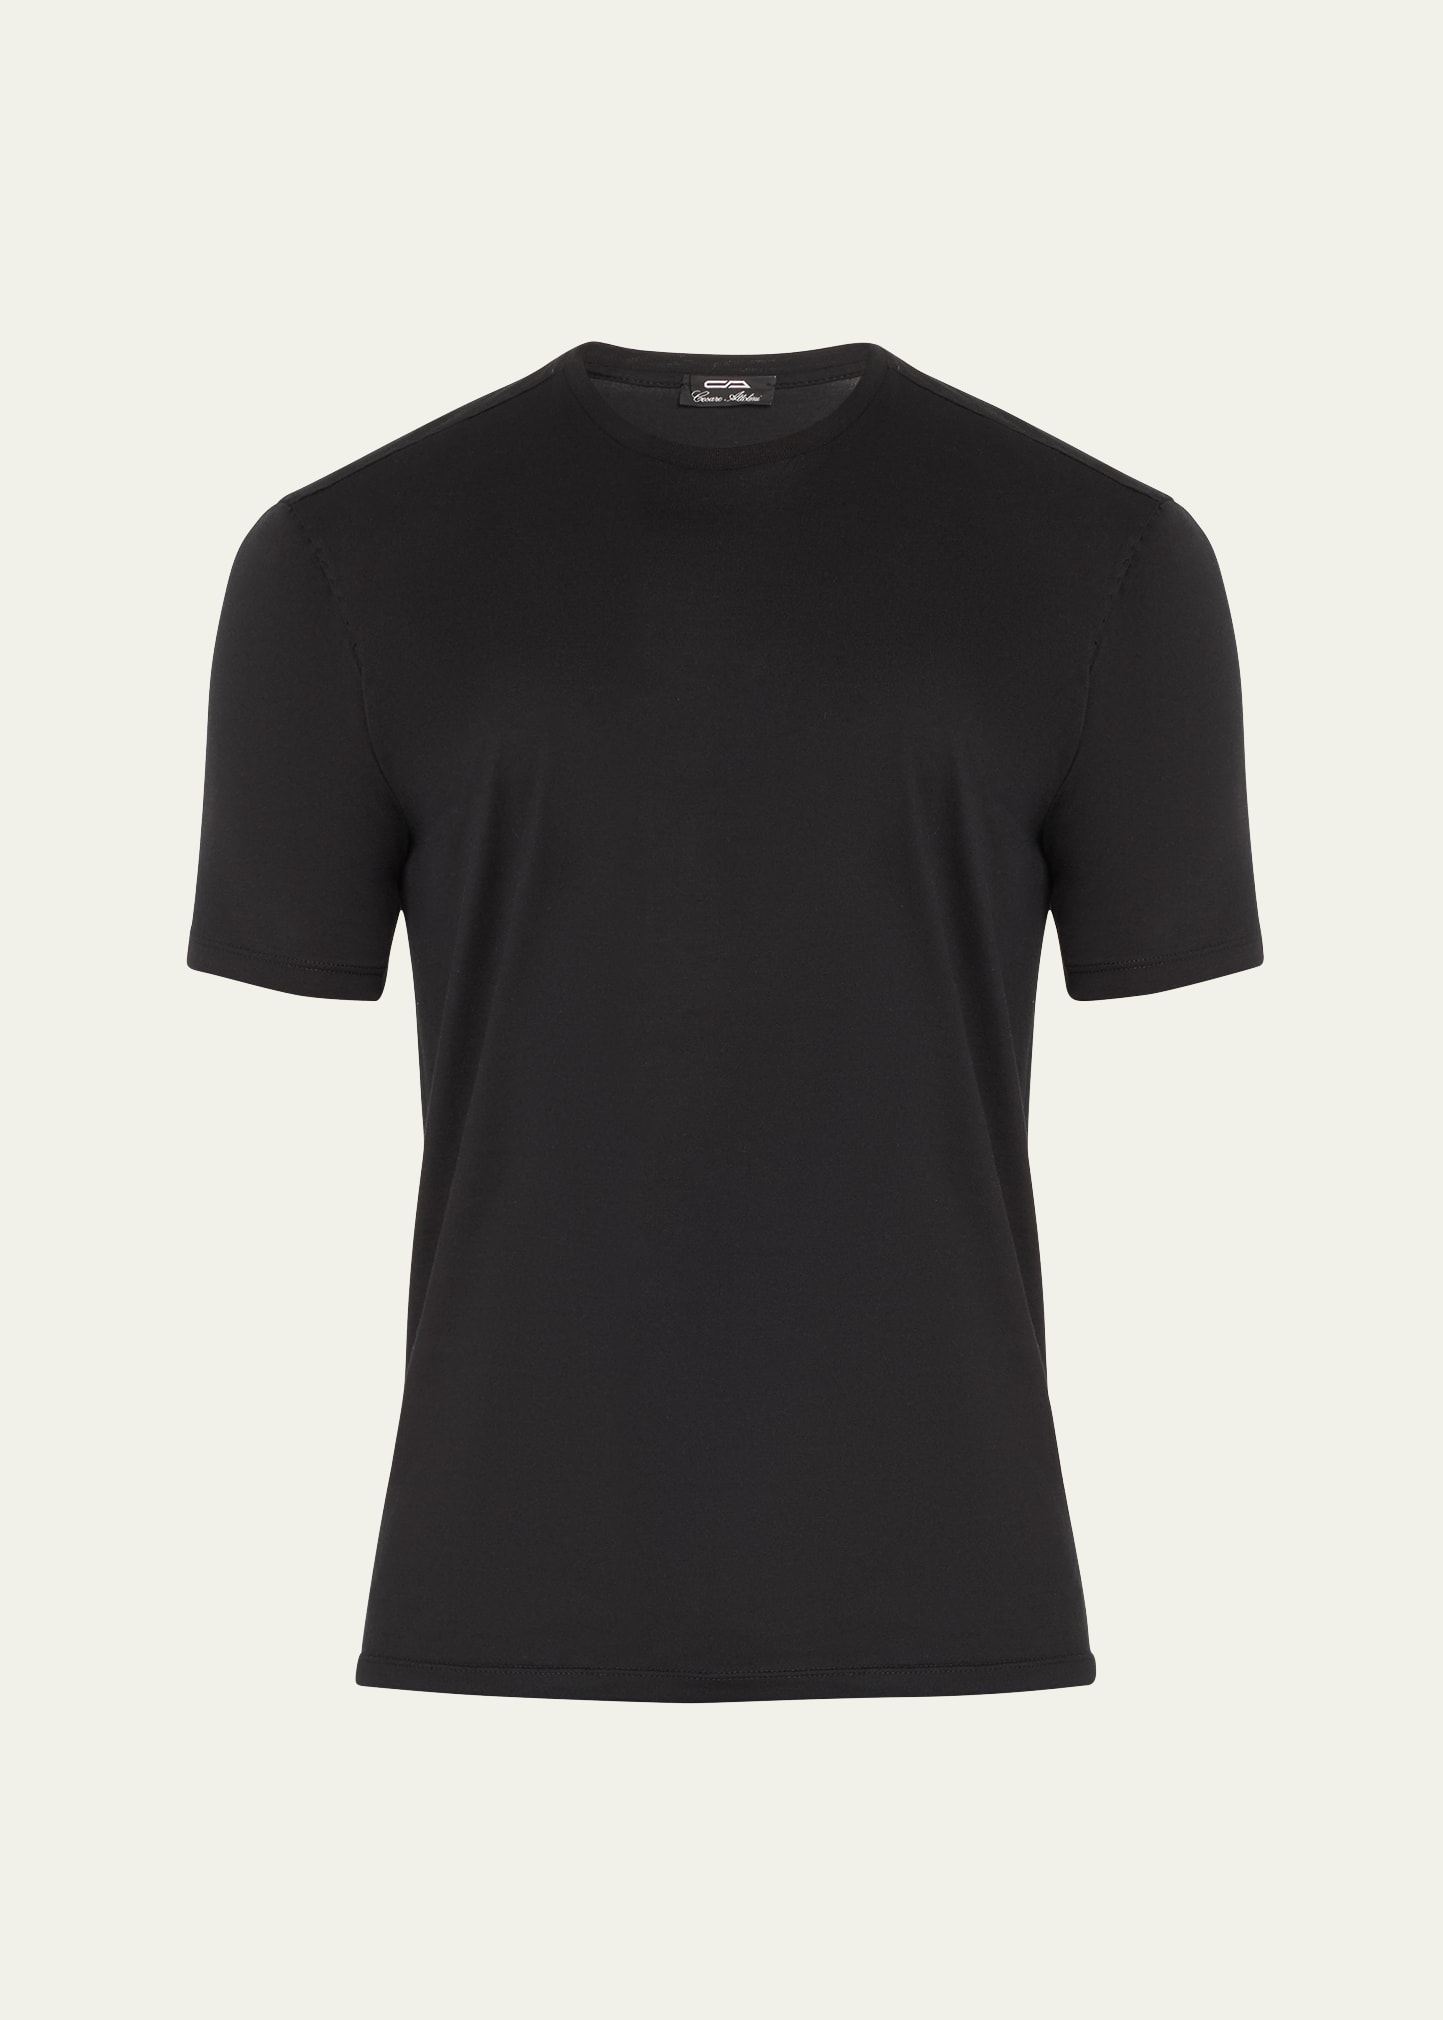 Cesare Attolini Men's Cotton Crew T-shirt In Black